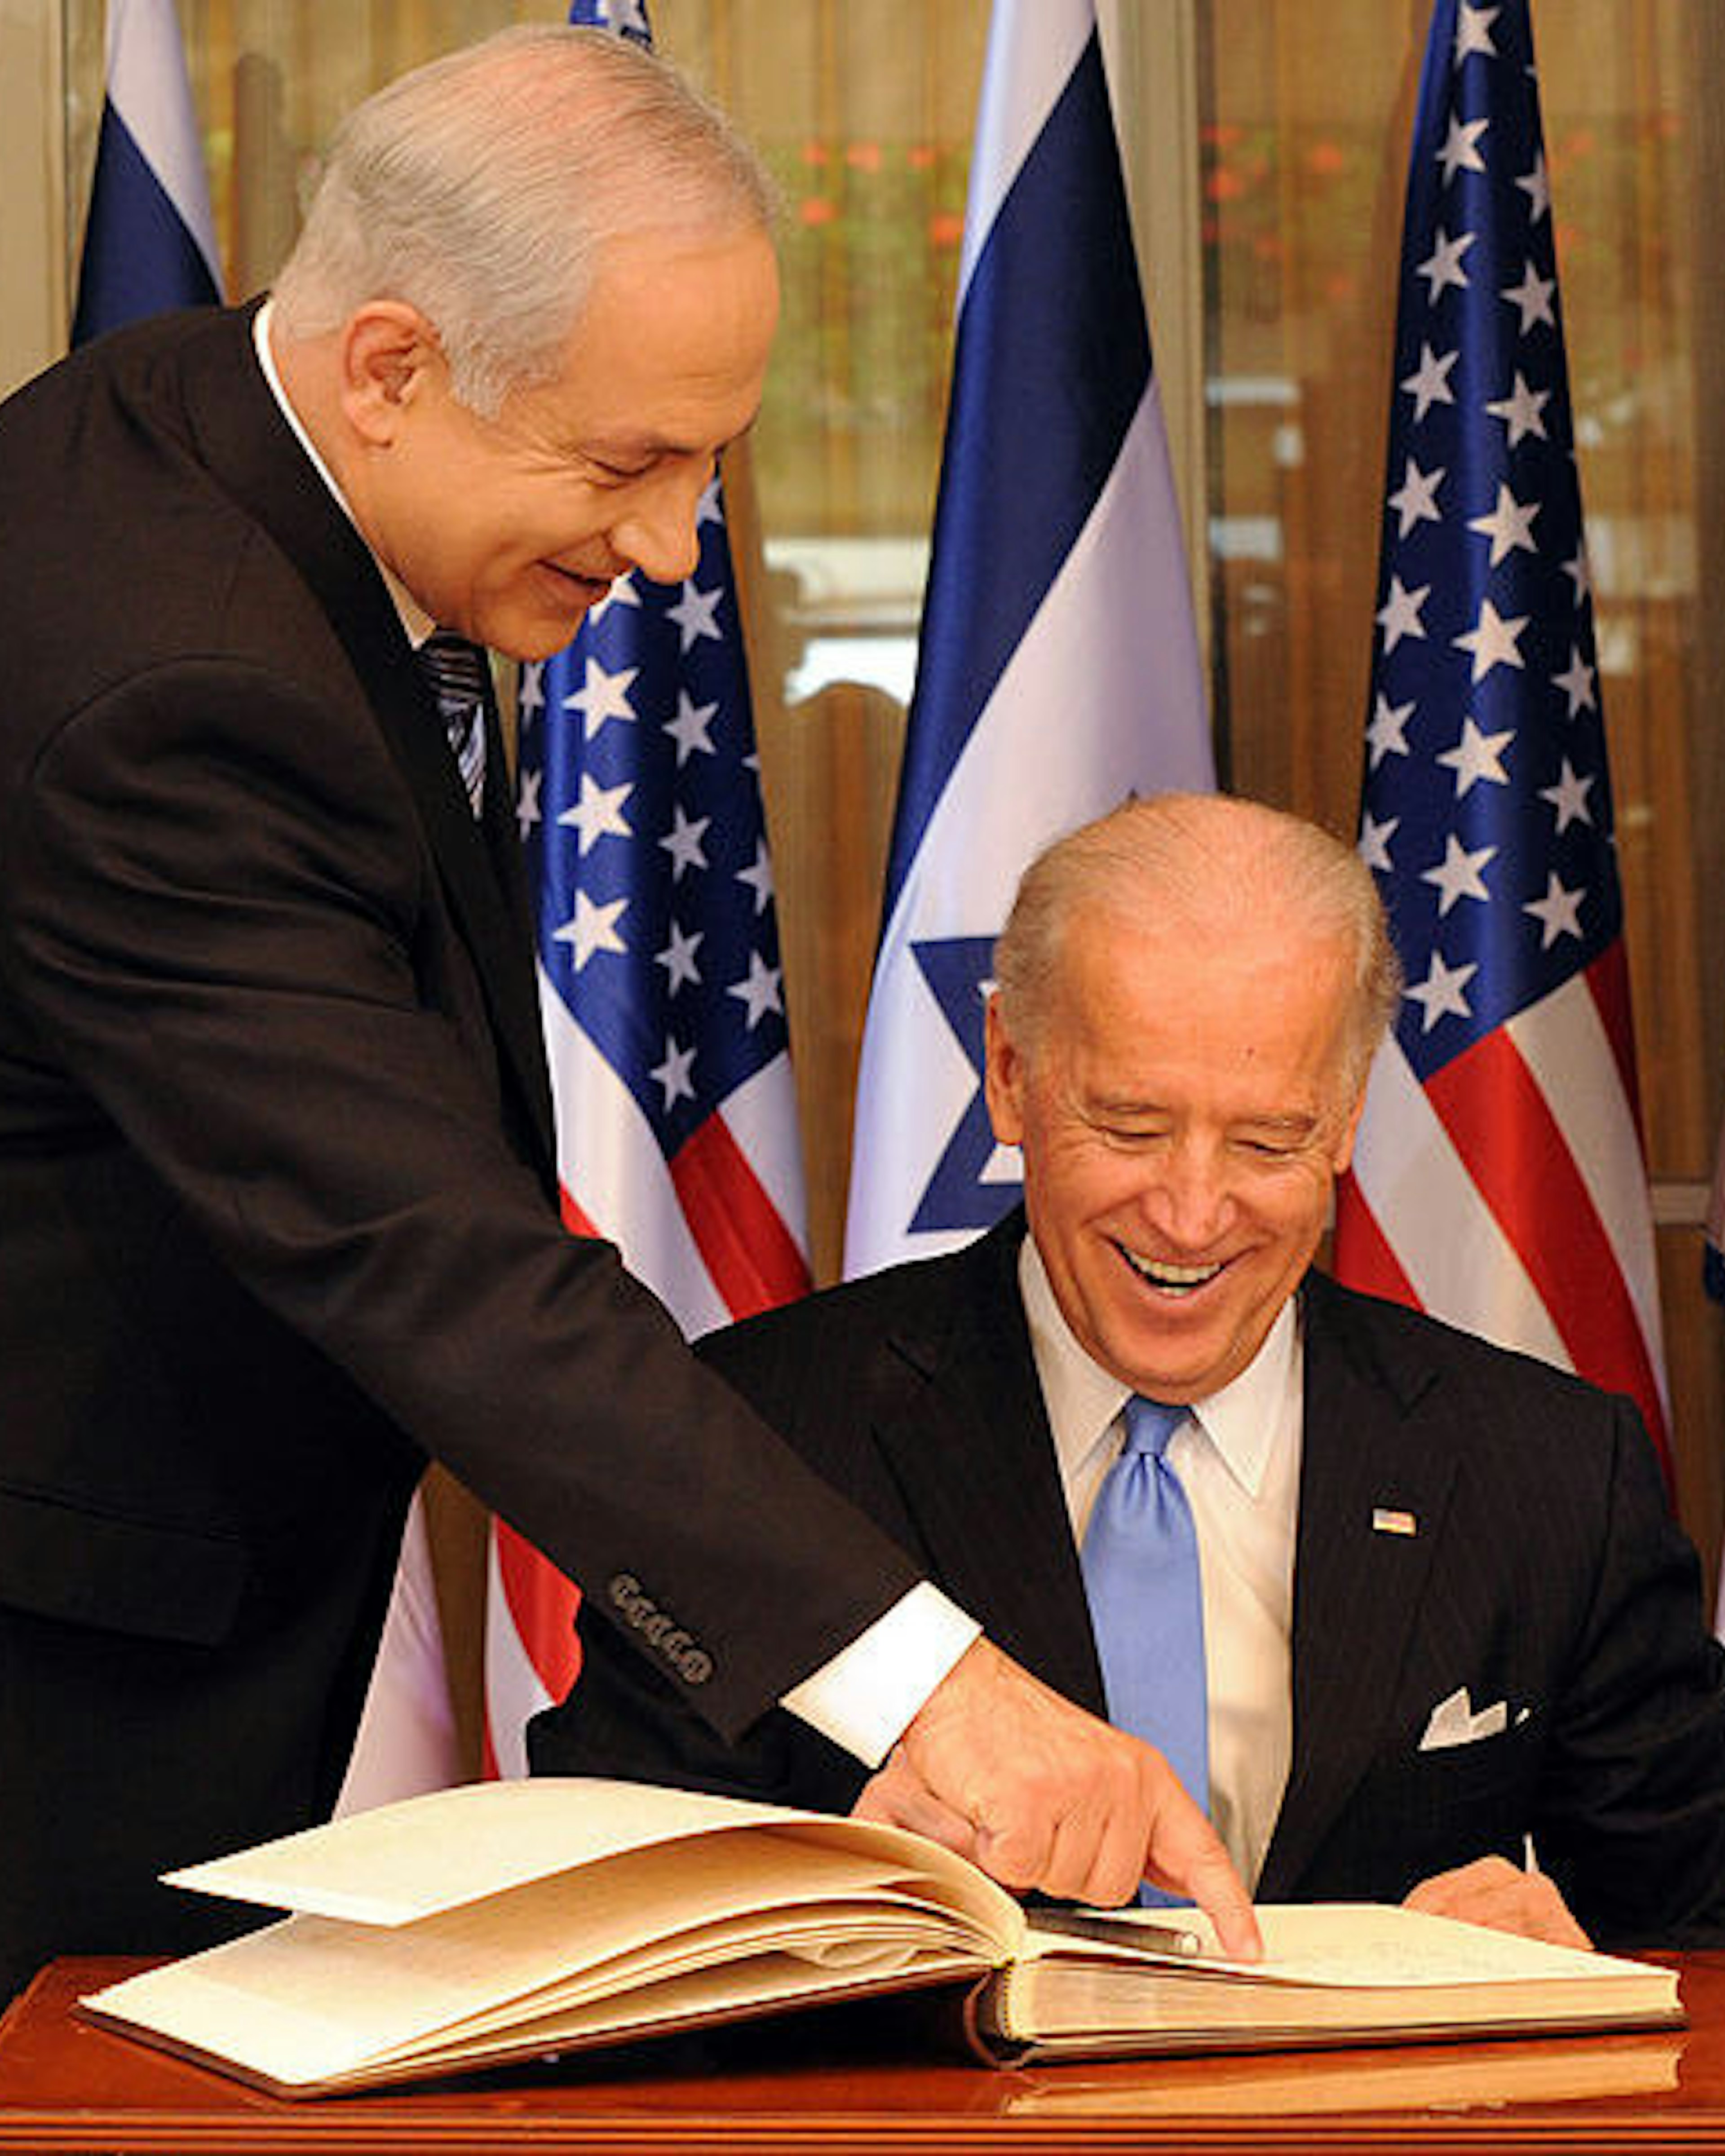 Israeli Prime Minister Benjamin Netanyahu helps US Vice President Joe Biden sign the guestbook at his residence in Jerusalem, March 9, 2010. UPI/Debbie Hill